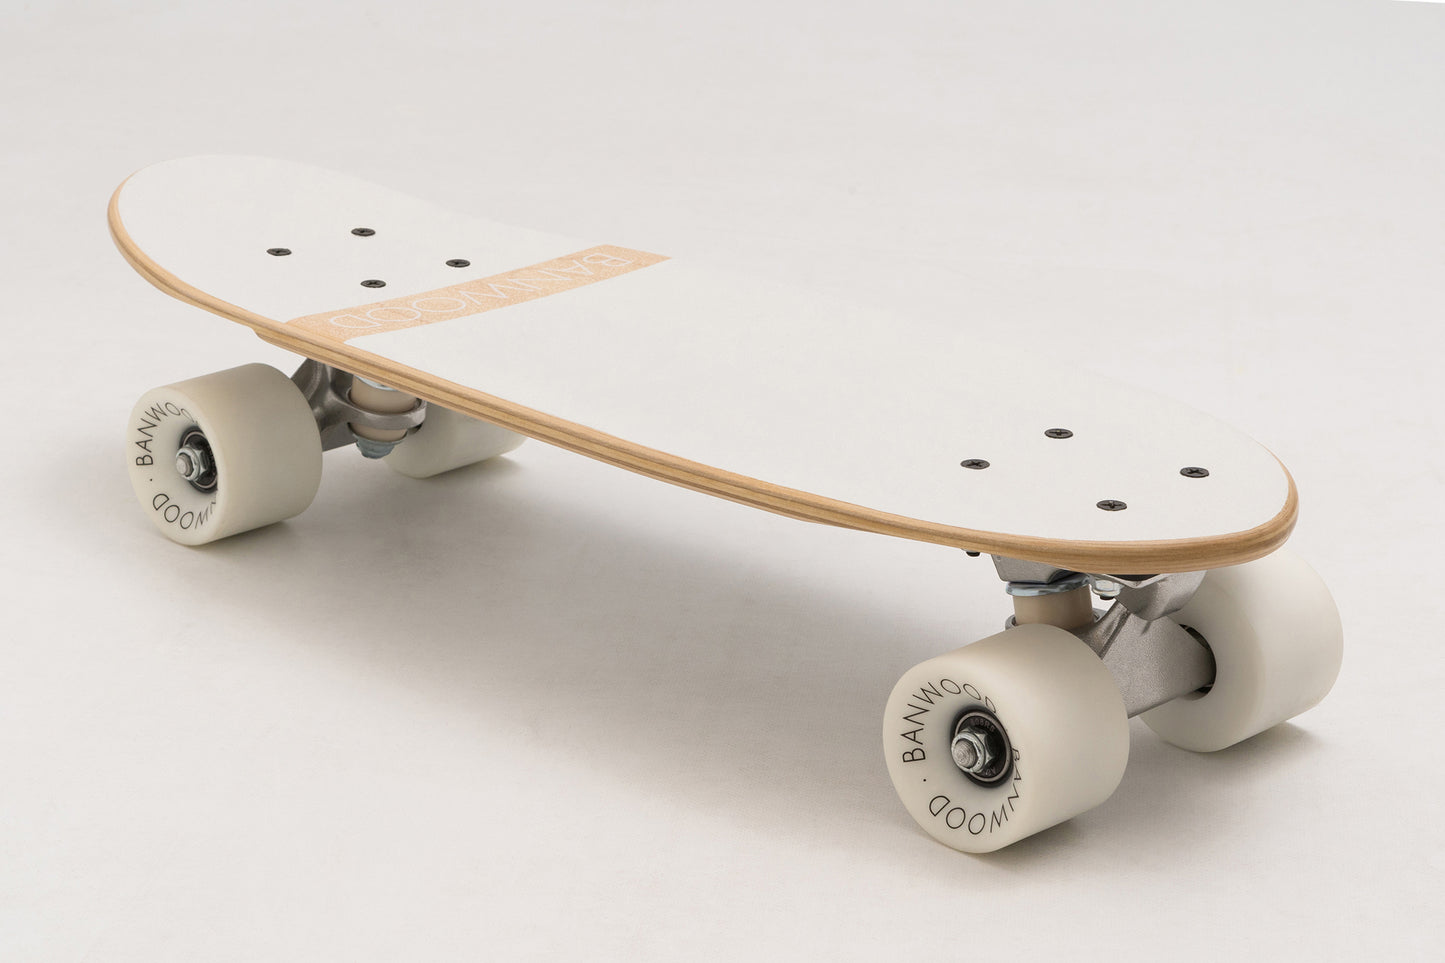 Banwood Skateboard weiß